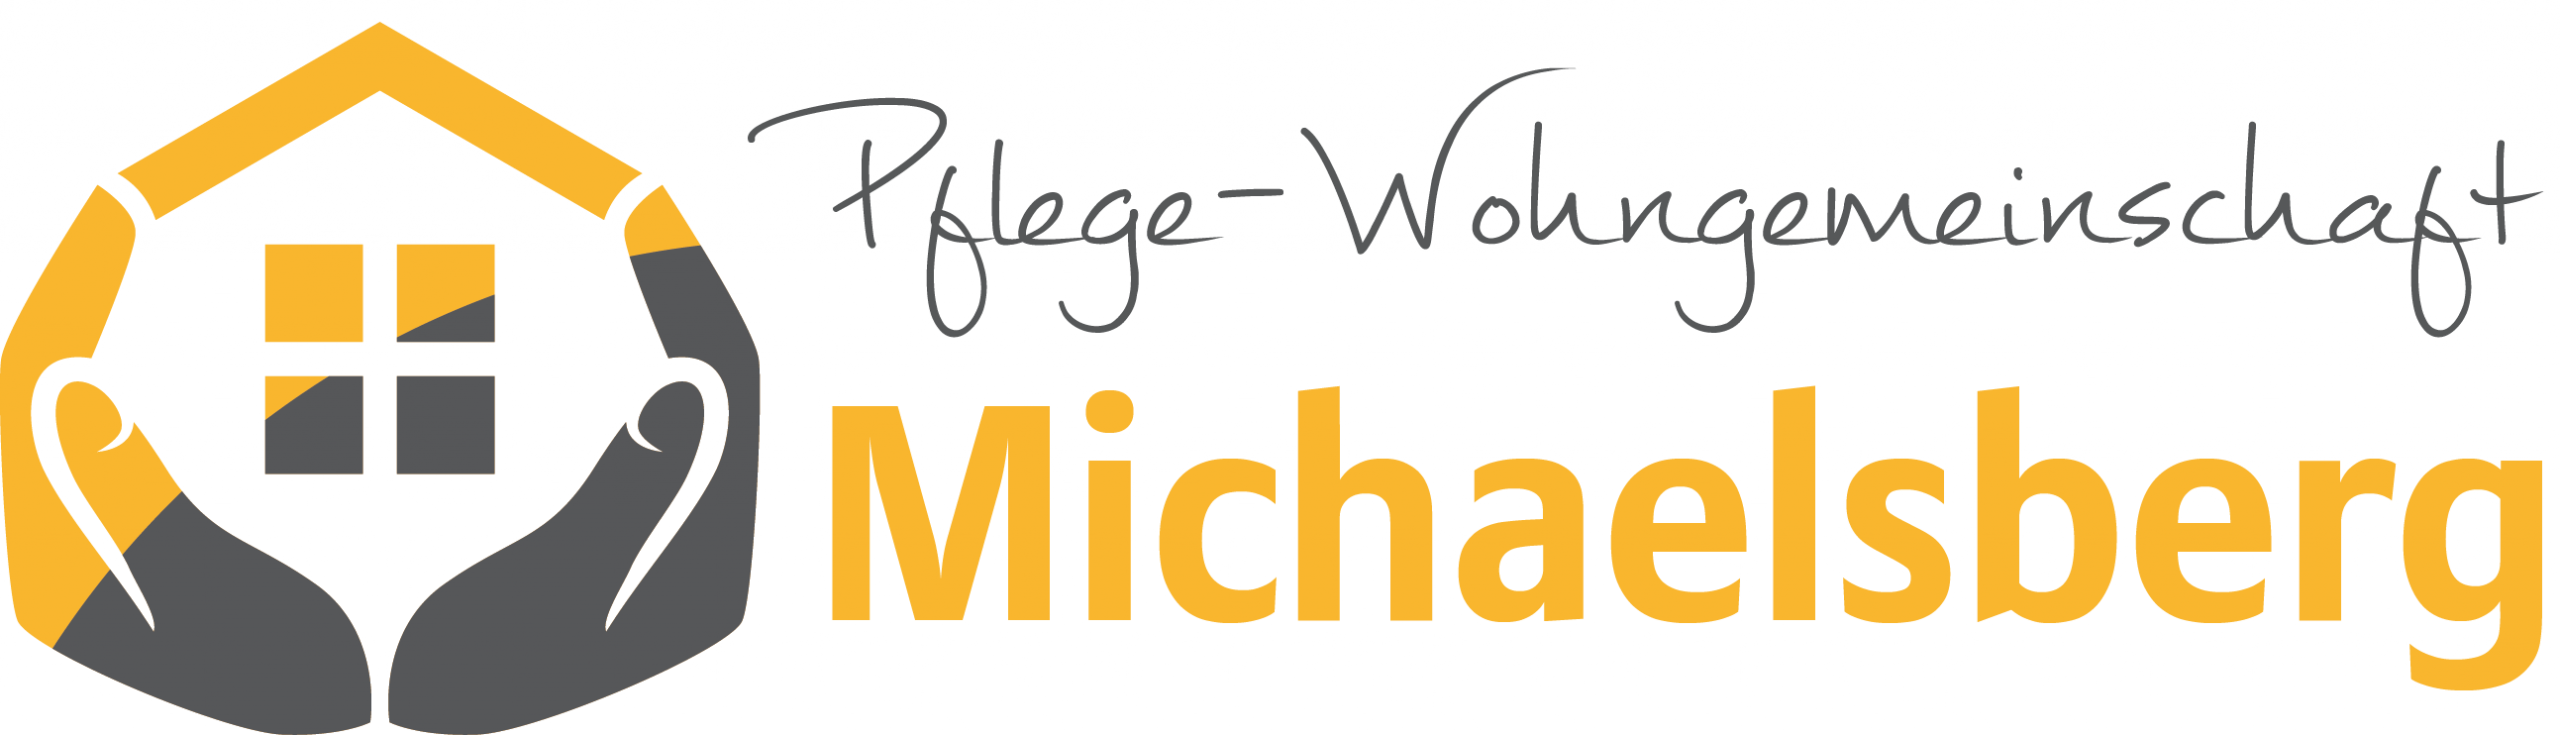 PflegeWG Michaelsberg Logo19 scaled